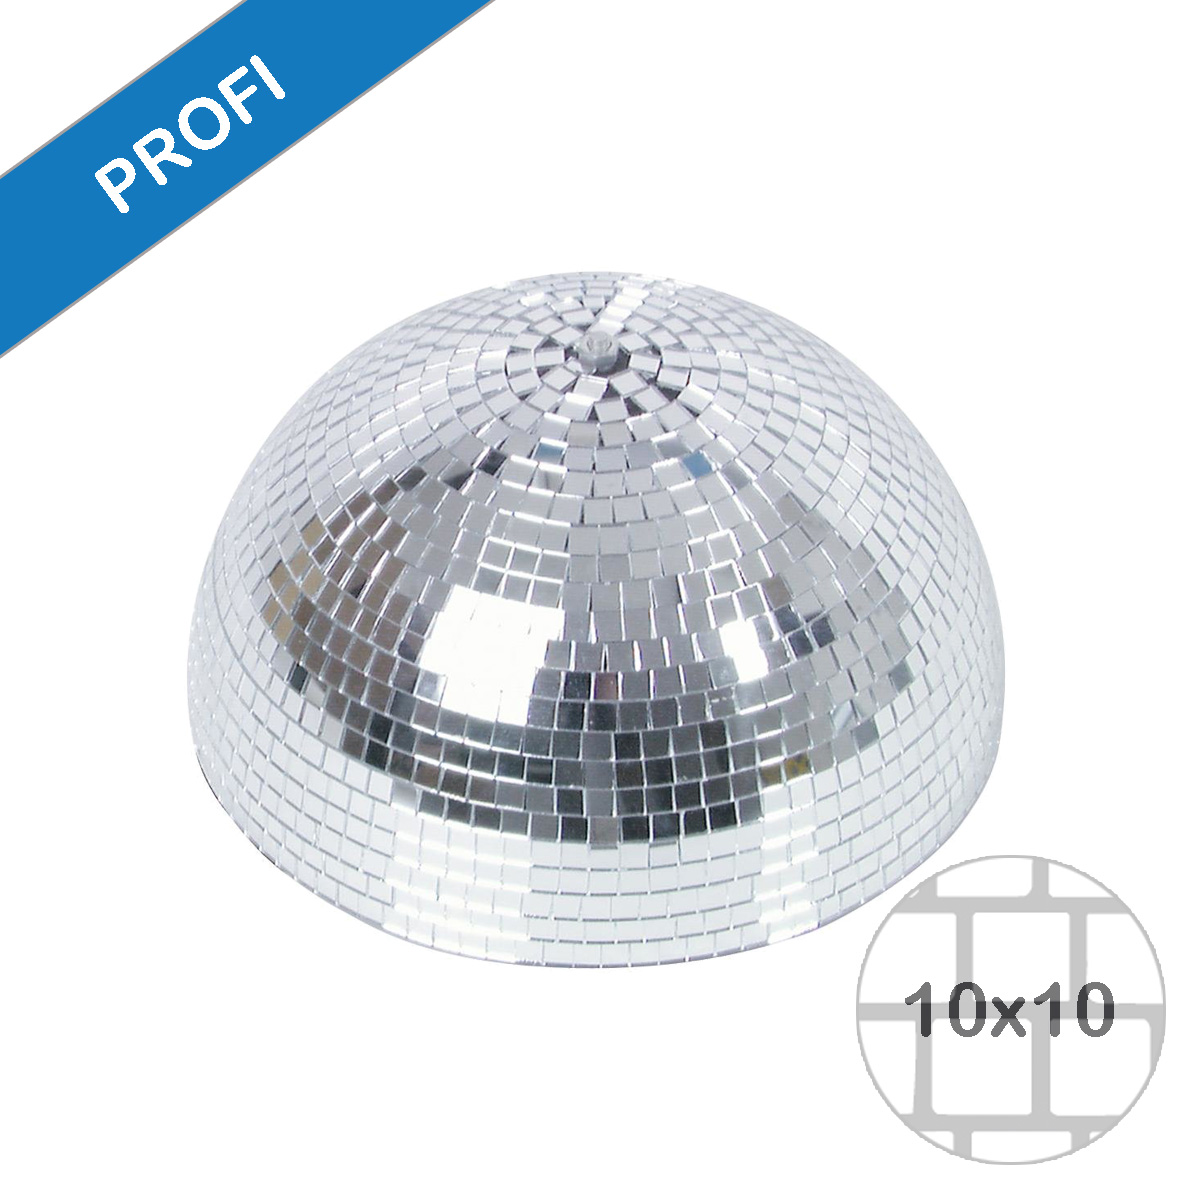 Spiegelkugel halb Halbkugel 30cm silber chrom- Diskokugel (Discokugel) Party Lichteffekt - Echtglas - mirrorball half safety silver chrome color